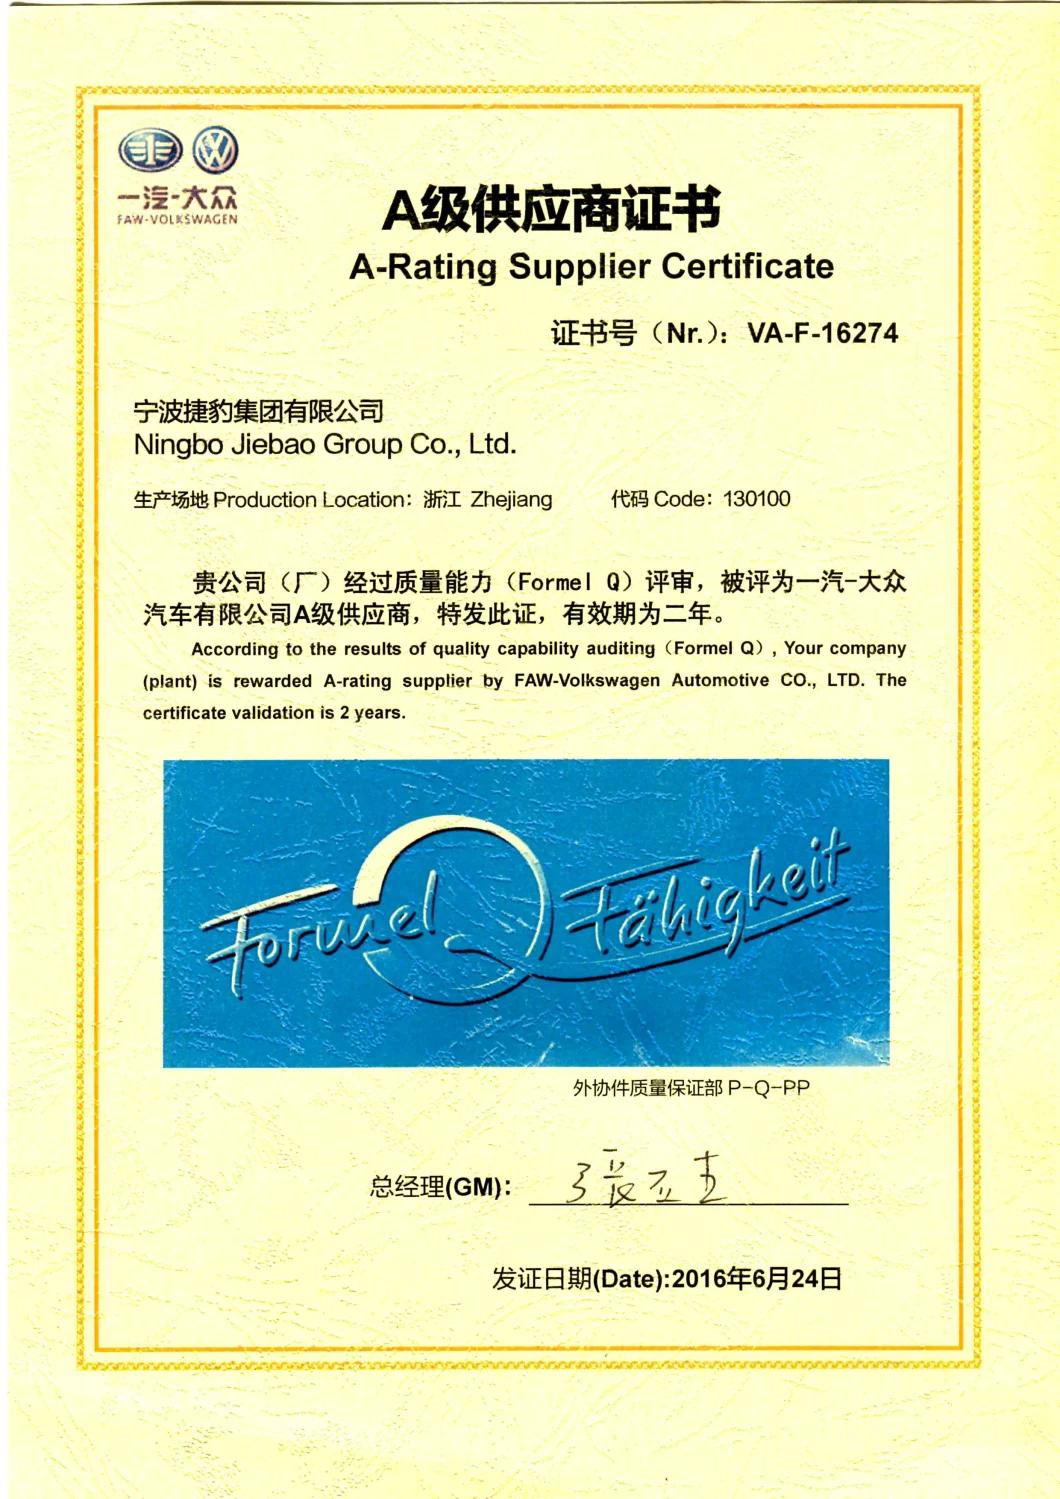 General Motors Transmission Belt Maker -Jiebao High Quality Transmission Parts Fan Automotive Textile Garment Packaging Agricultural Machinery Toothed Belt